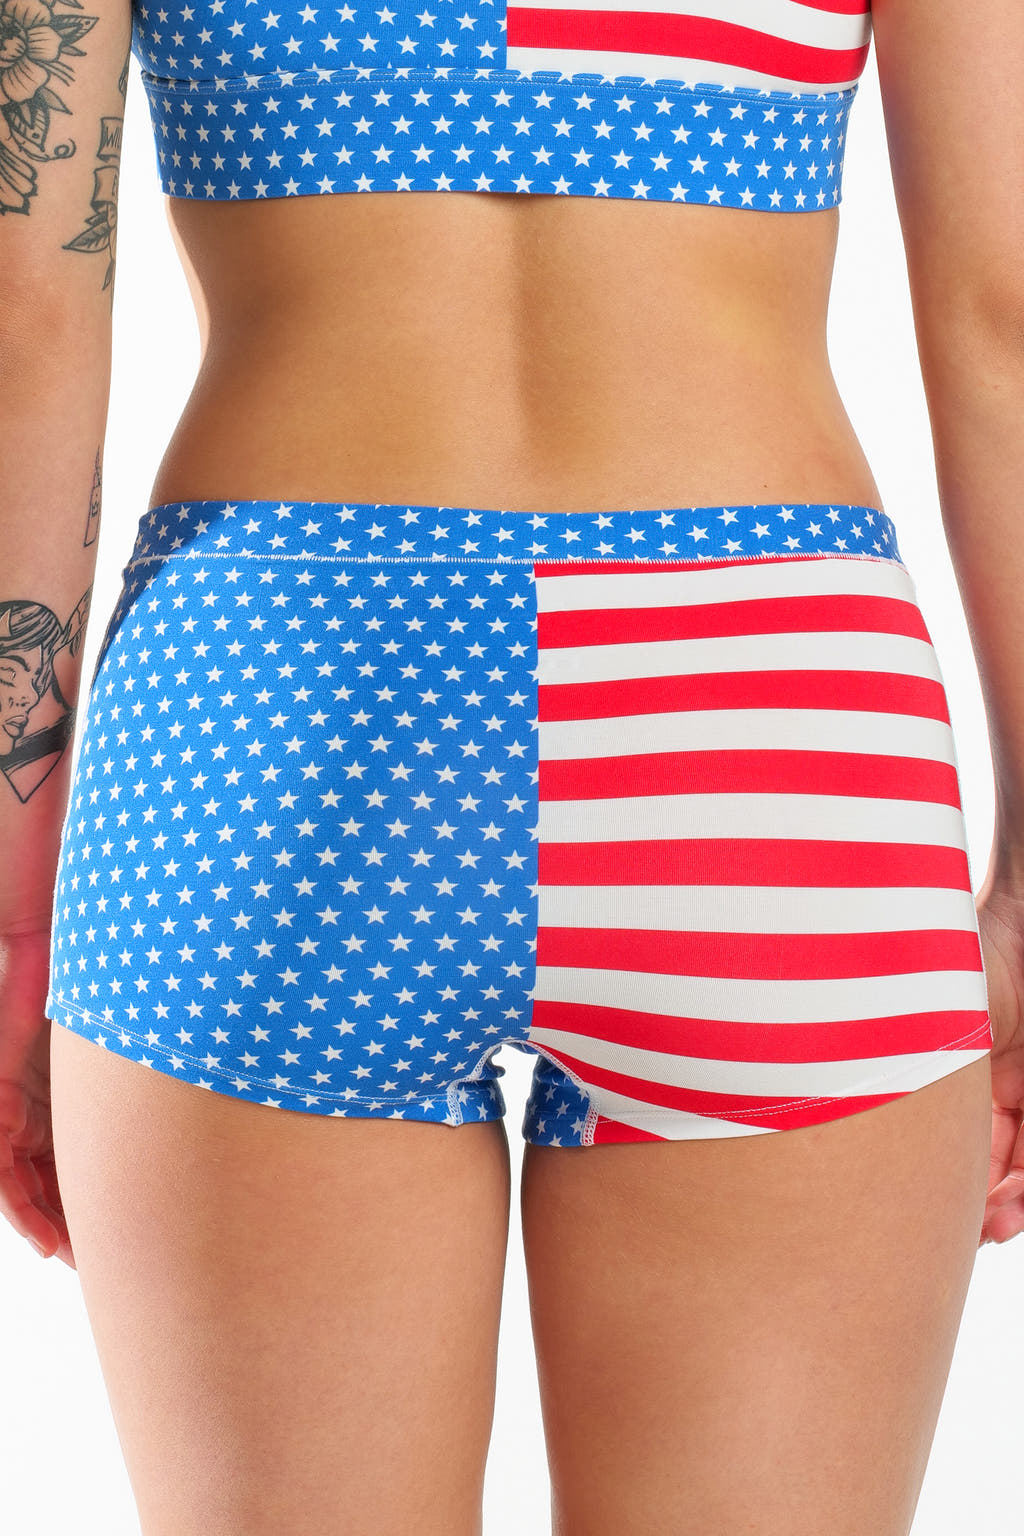 Women's USA flag boyshort underwear